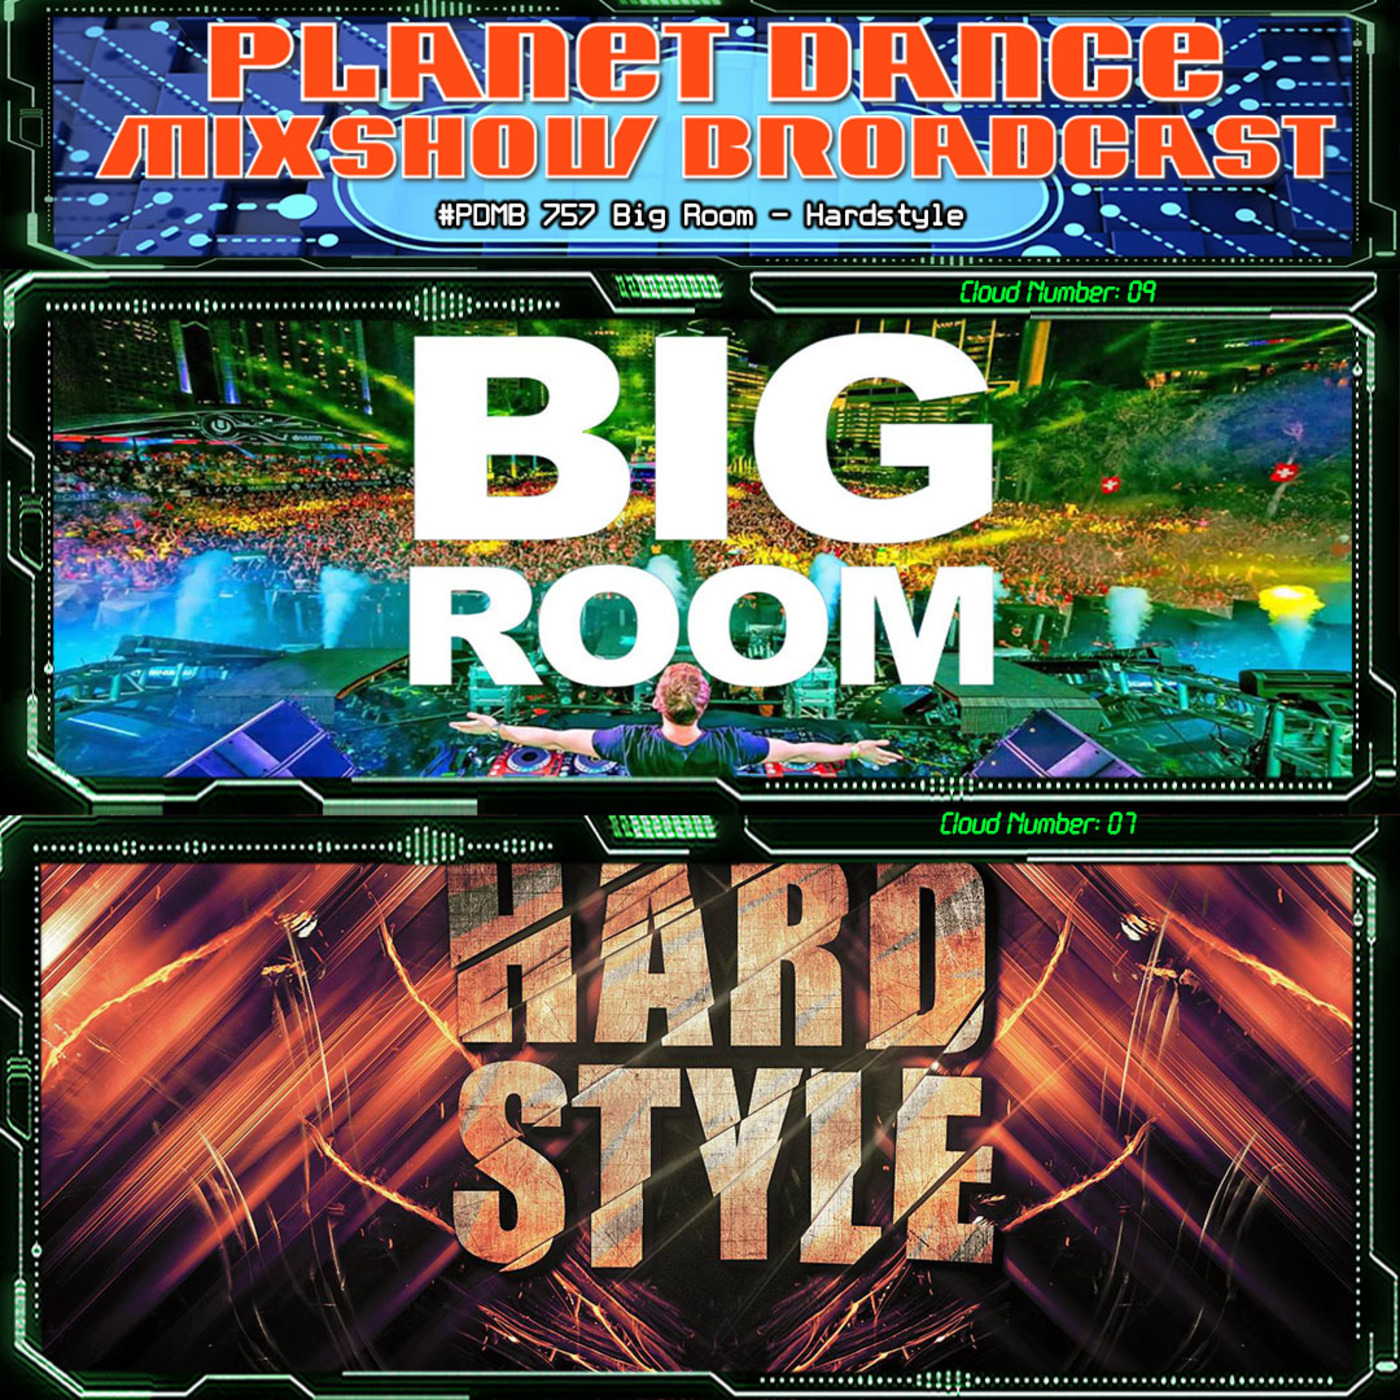 Planet Dance Mixshow Broadcast 757 Big Room - Hardstyle